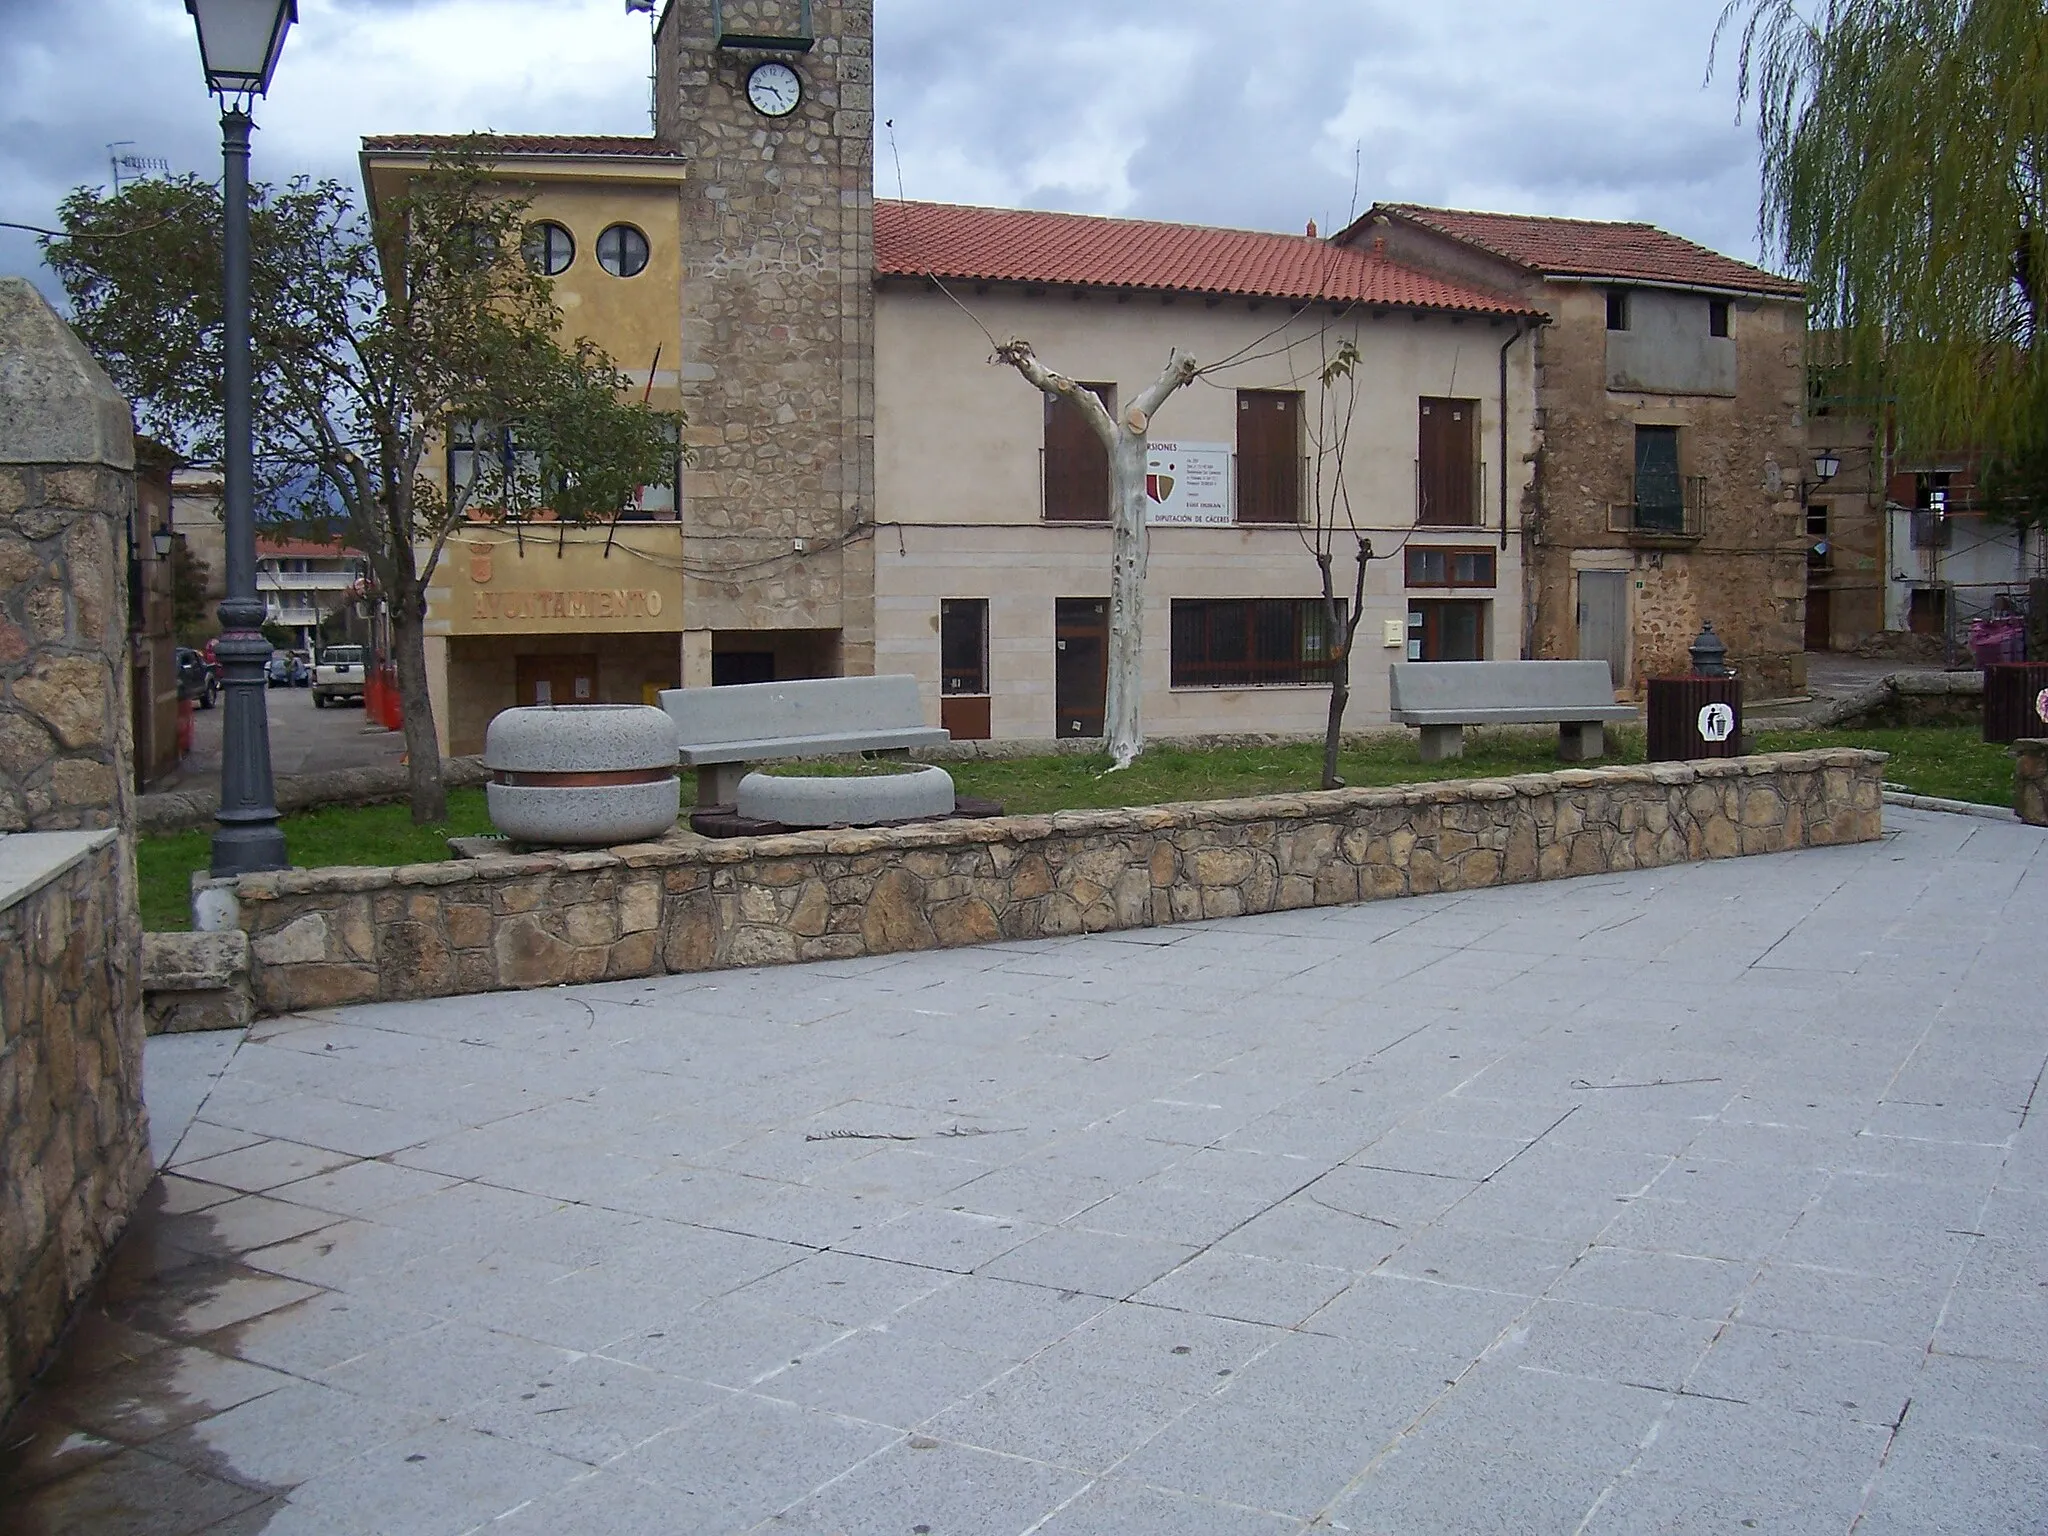 Photo showing: Plaza del Palacio, Villasbuenas de Gata, provincia de Cáceres, España.